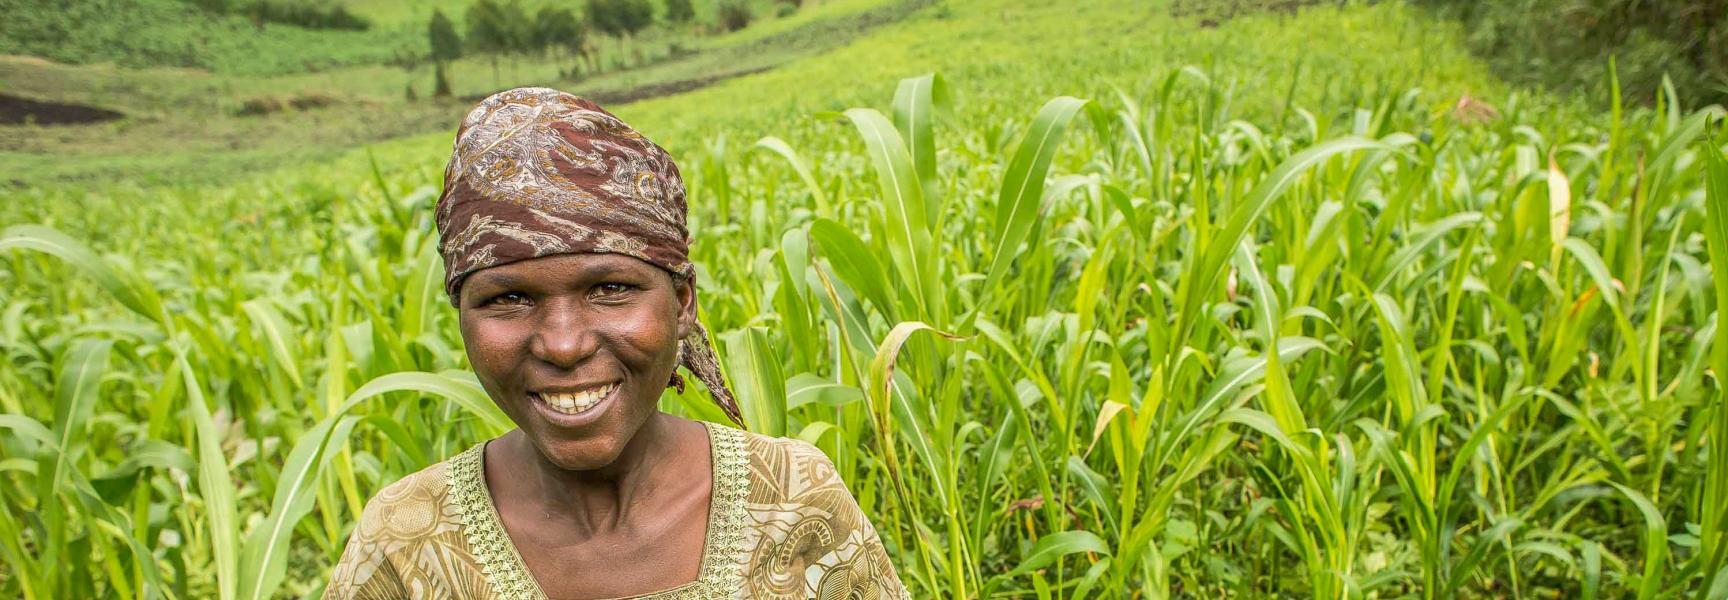 A woman farmer standing in a field in the Democratic Republic of the Congo